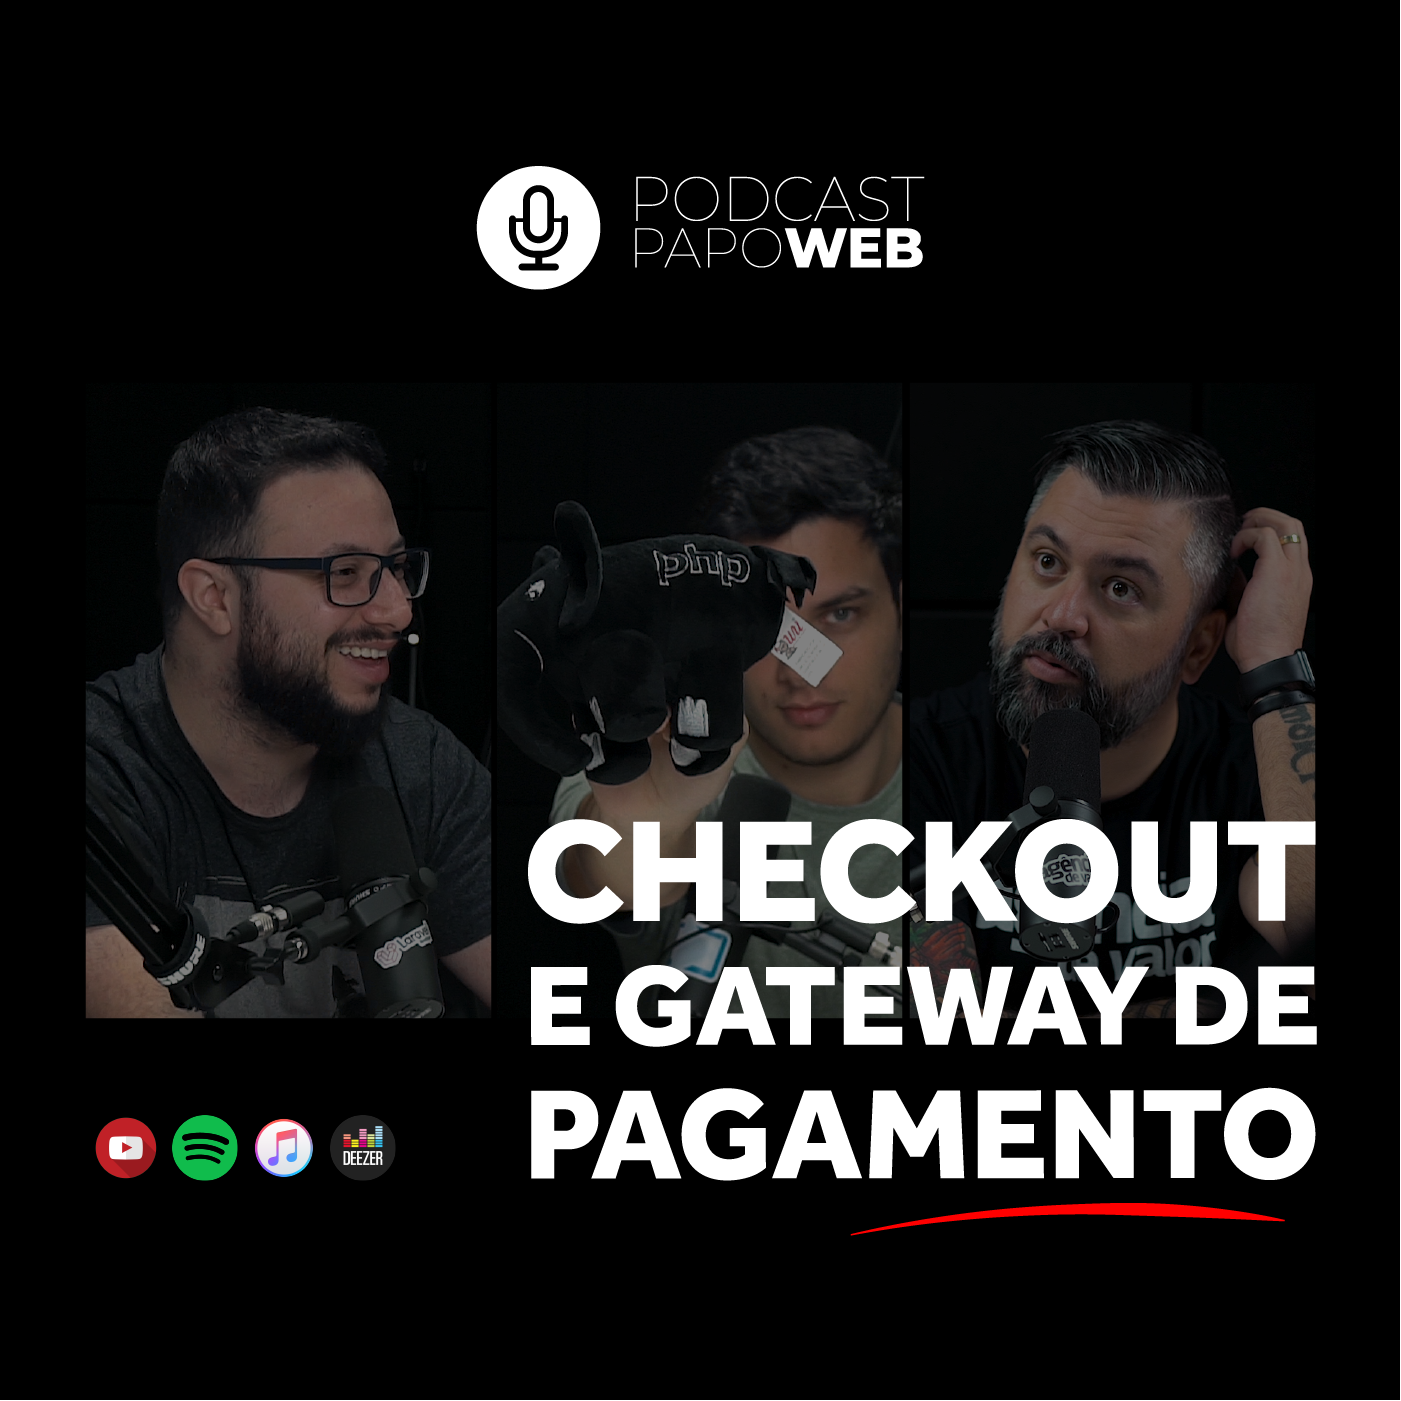 Checkout e Gateway de pagamento | Podcast Papo Web #052